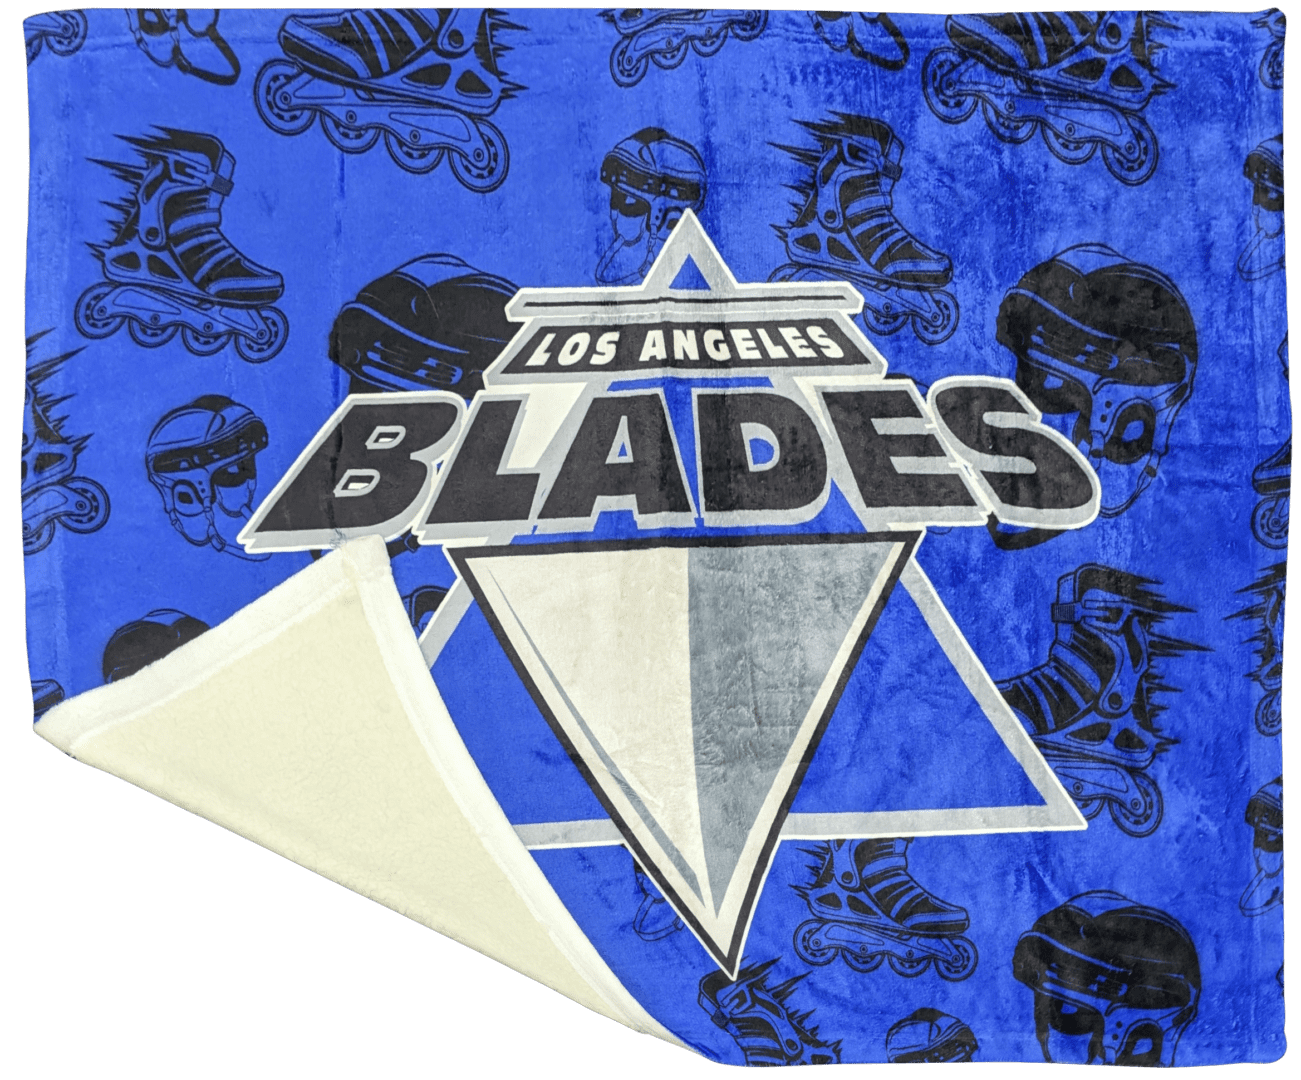 Los Angeles blades text on blue color cloth